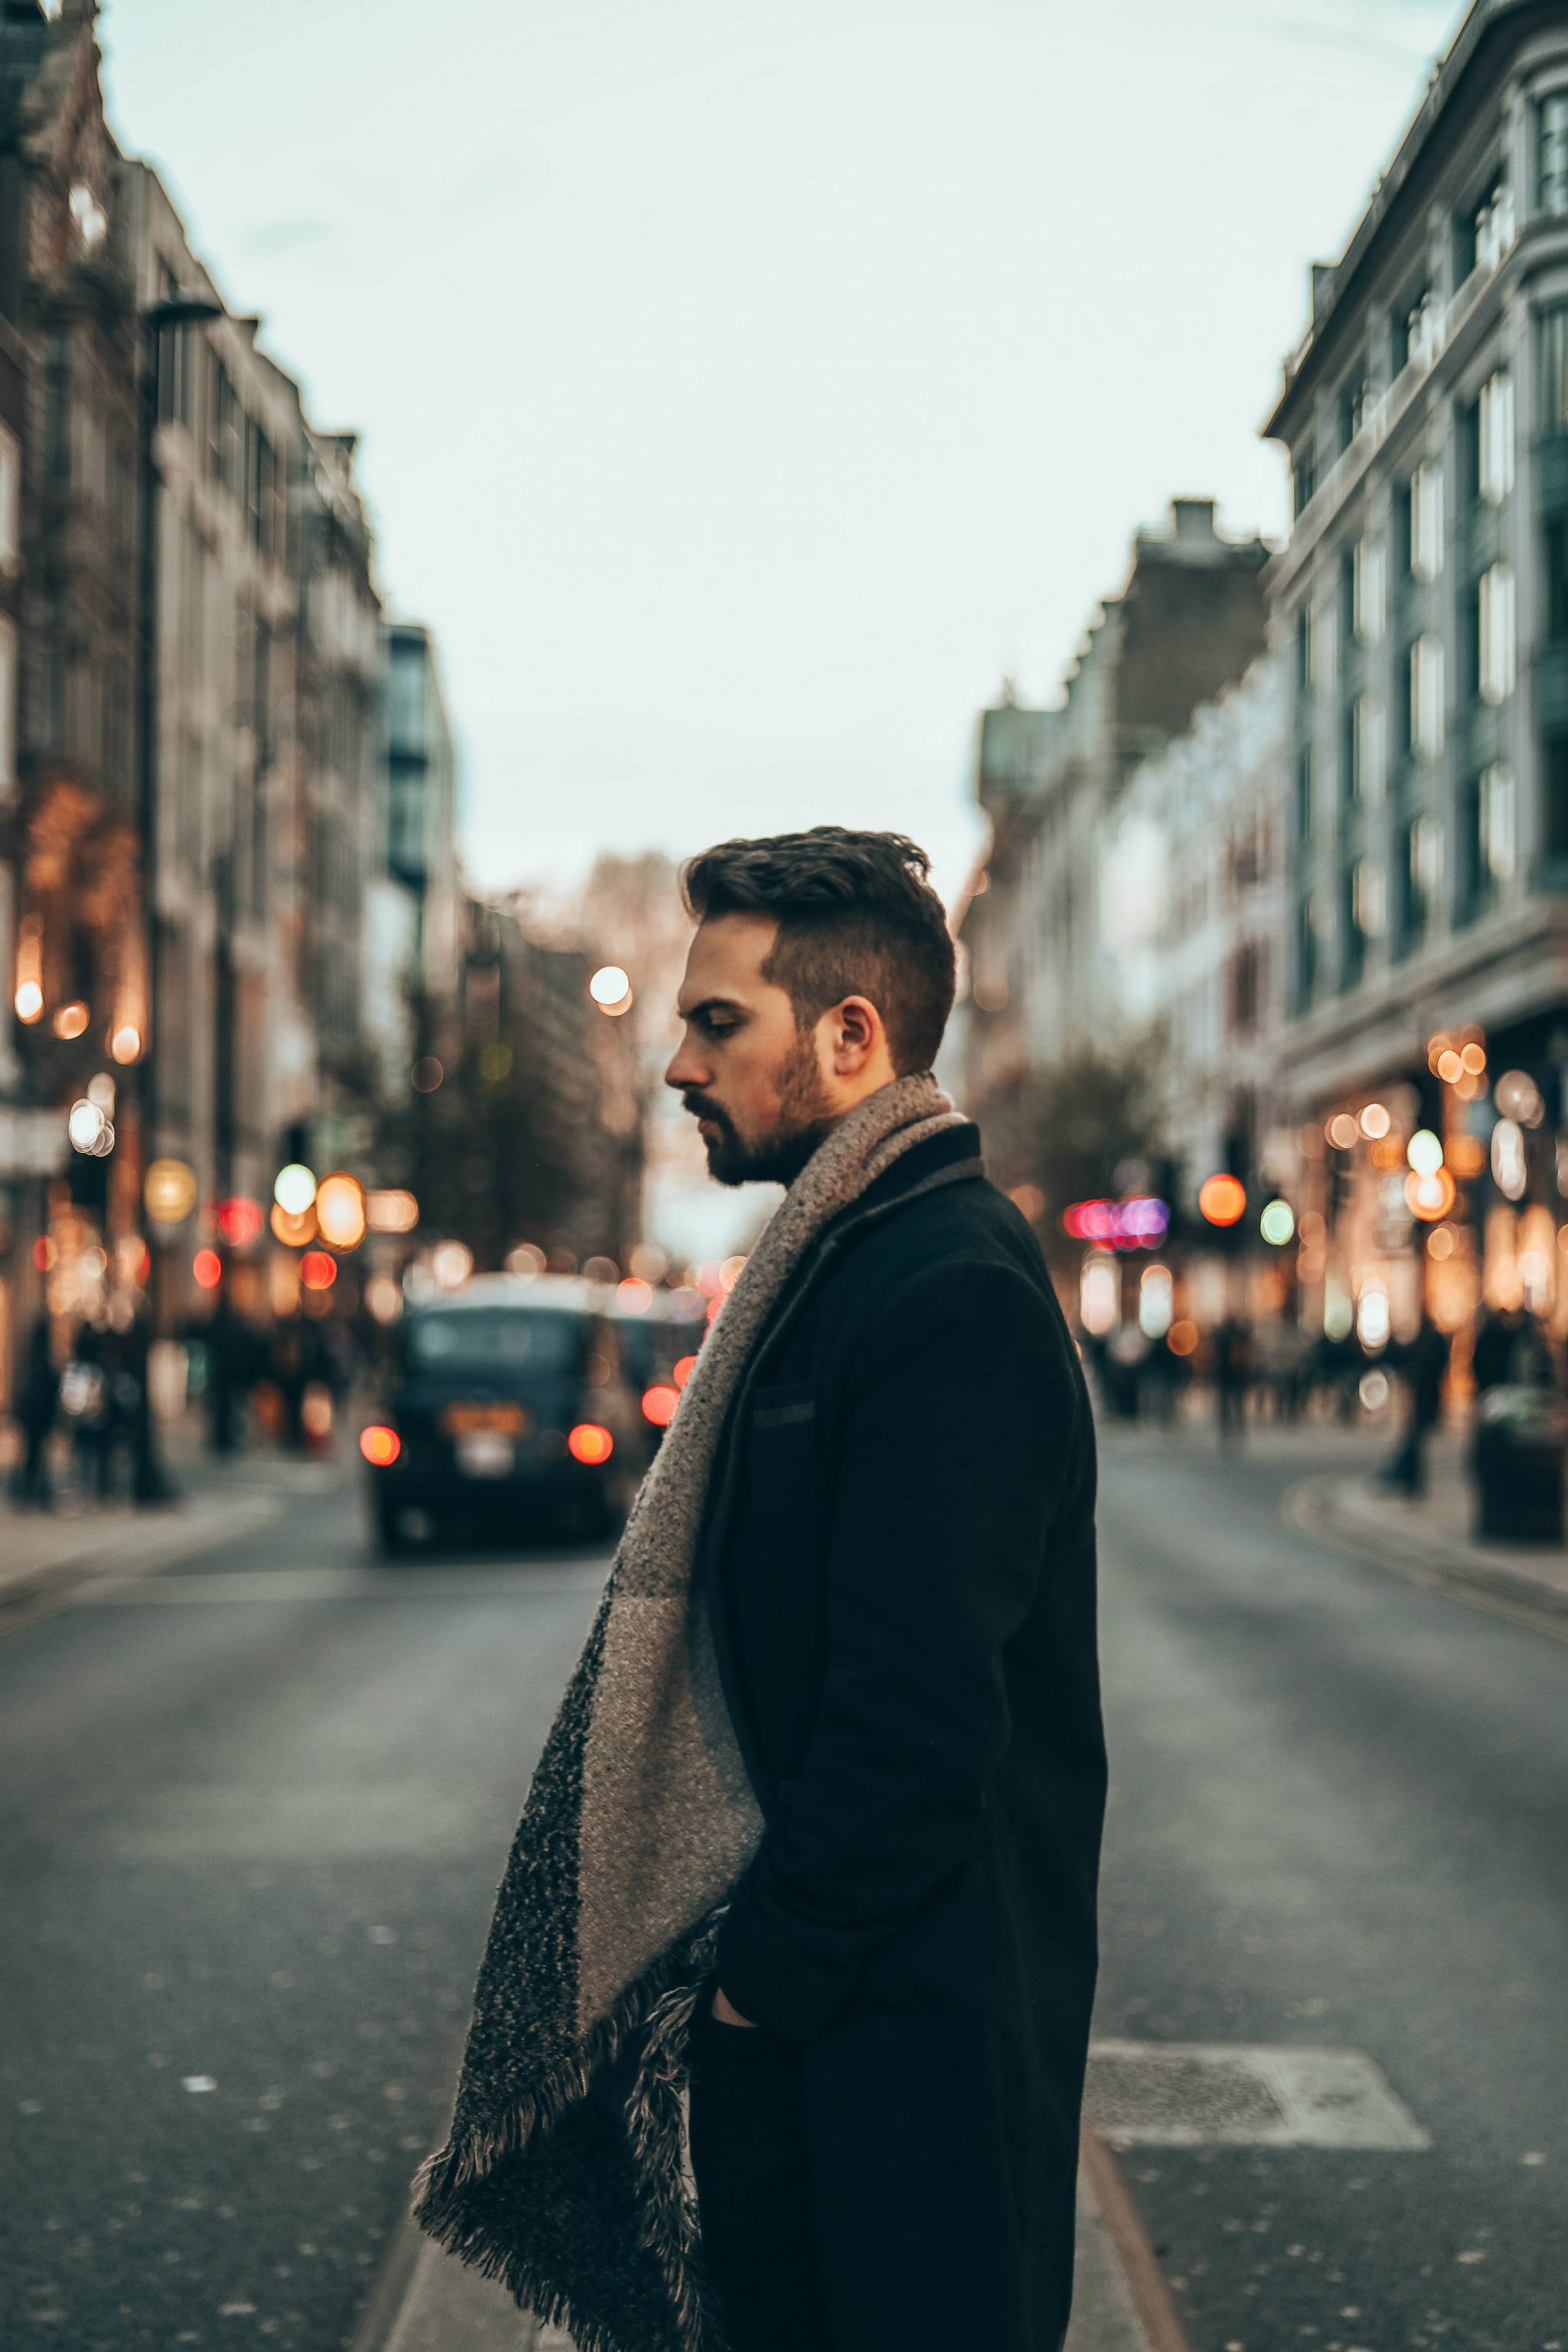 High street fashion is growing on British men